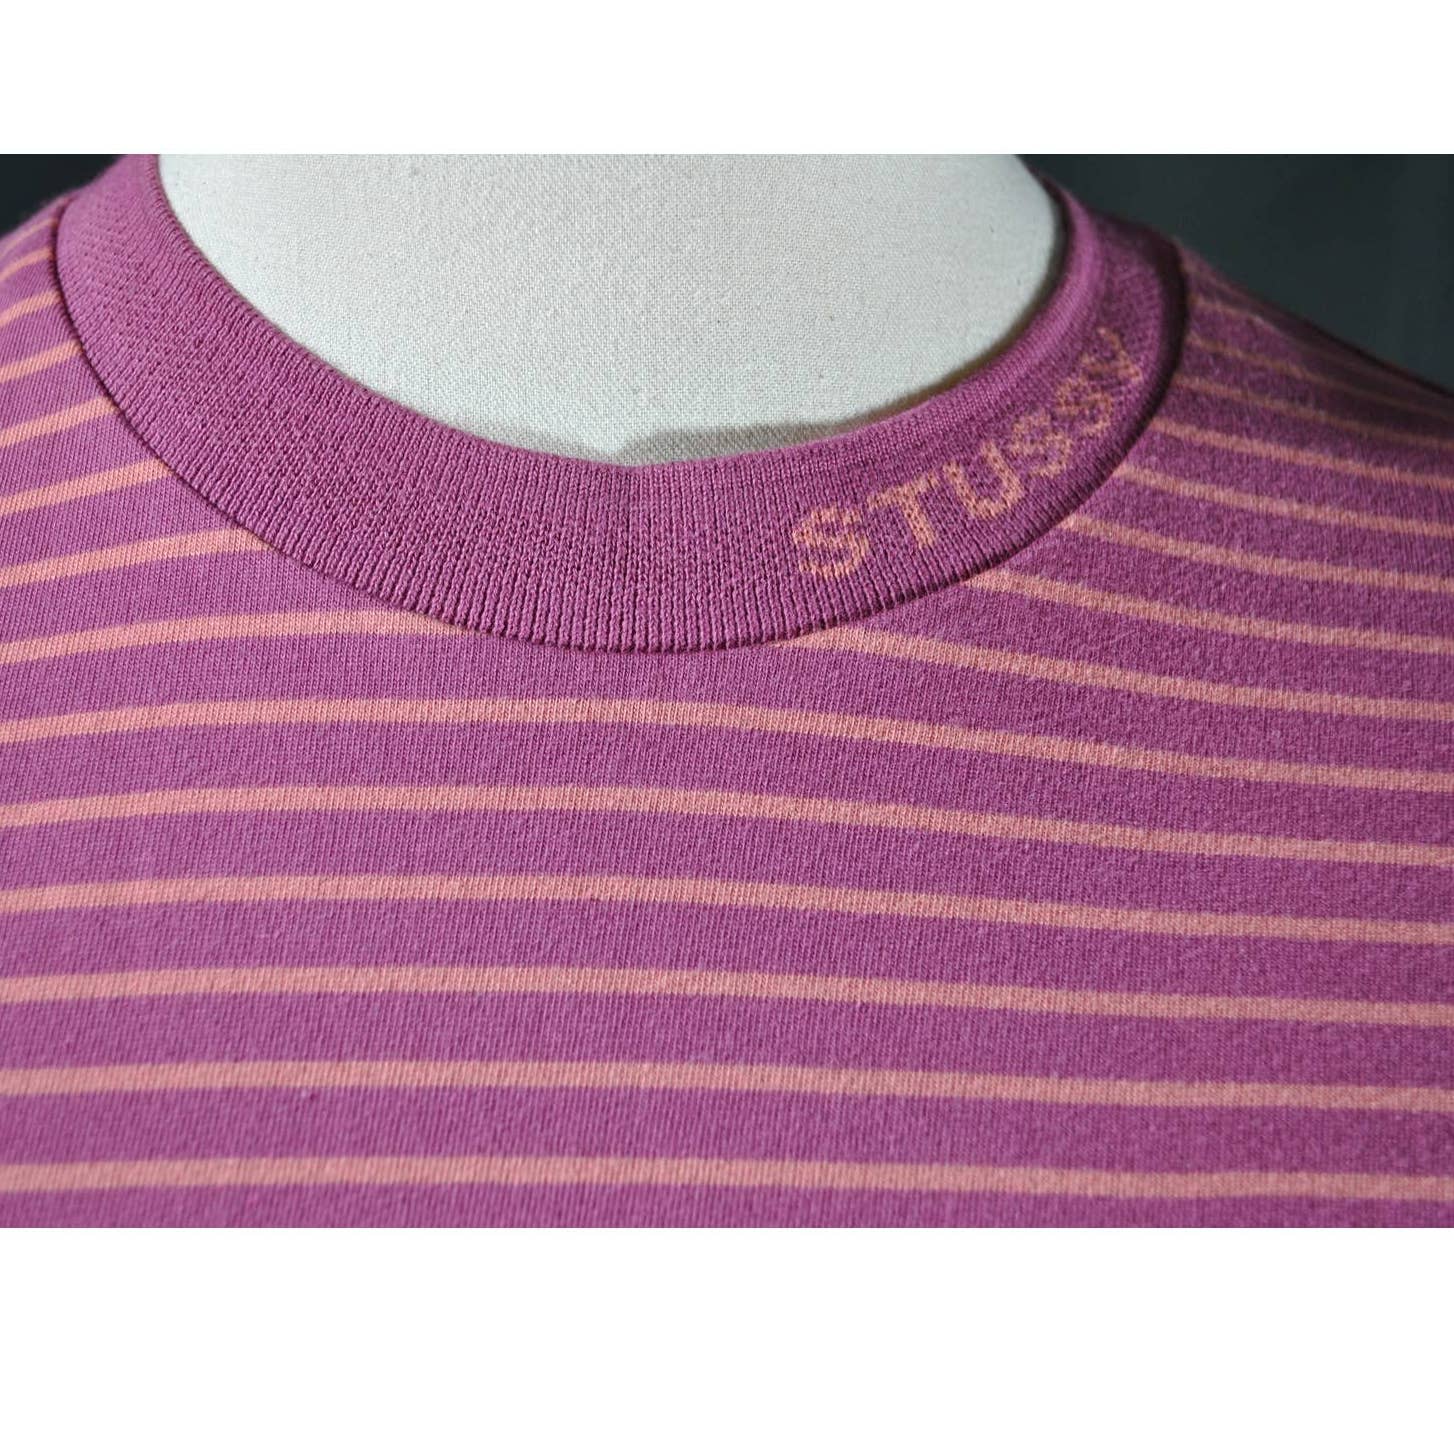 Stussy PInk Striped Crew Neck T-Shirt - M